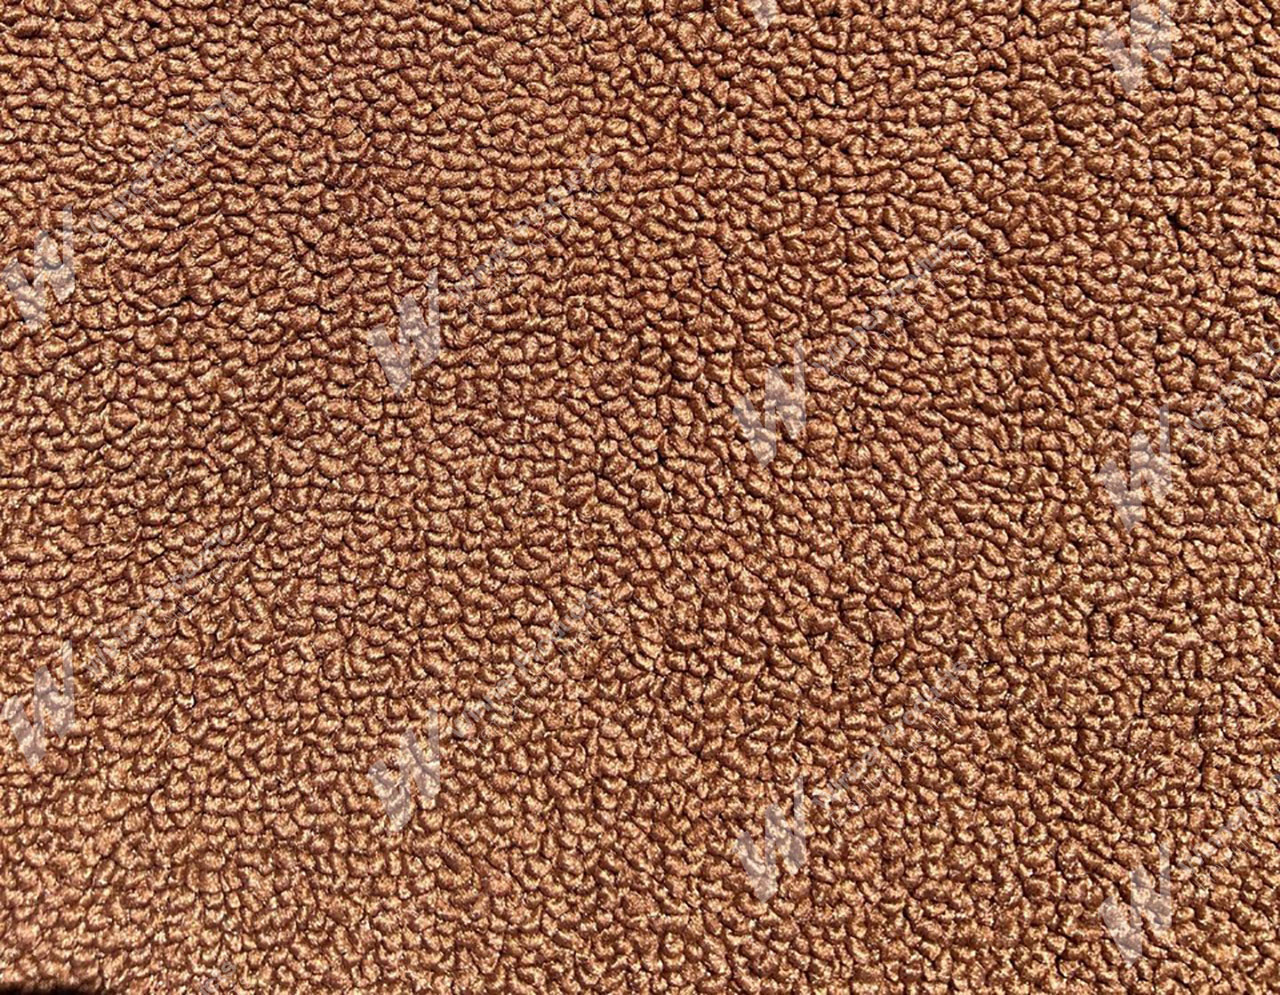 Ford Falcon 500 XA 500 Sedan P Parchment Carpet (Image 1 of 1)